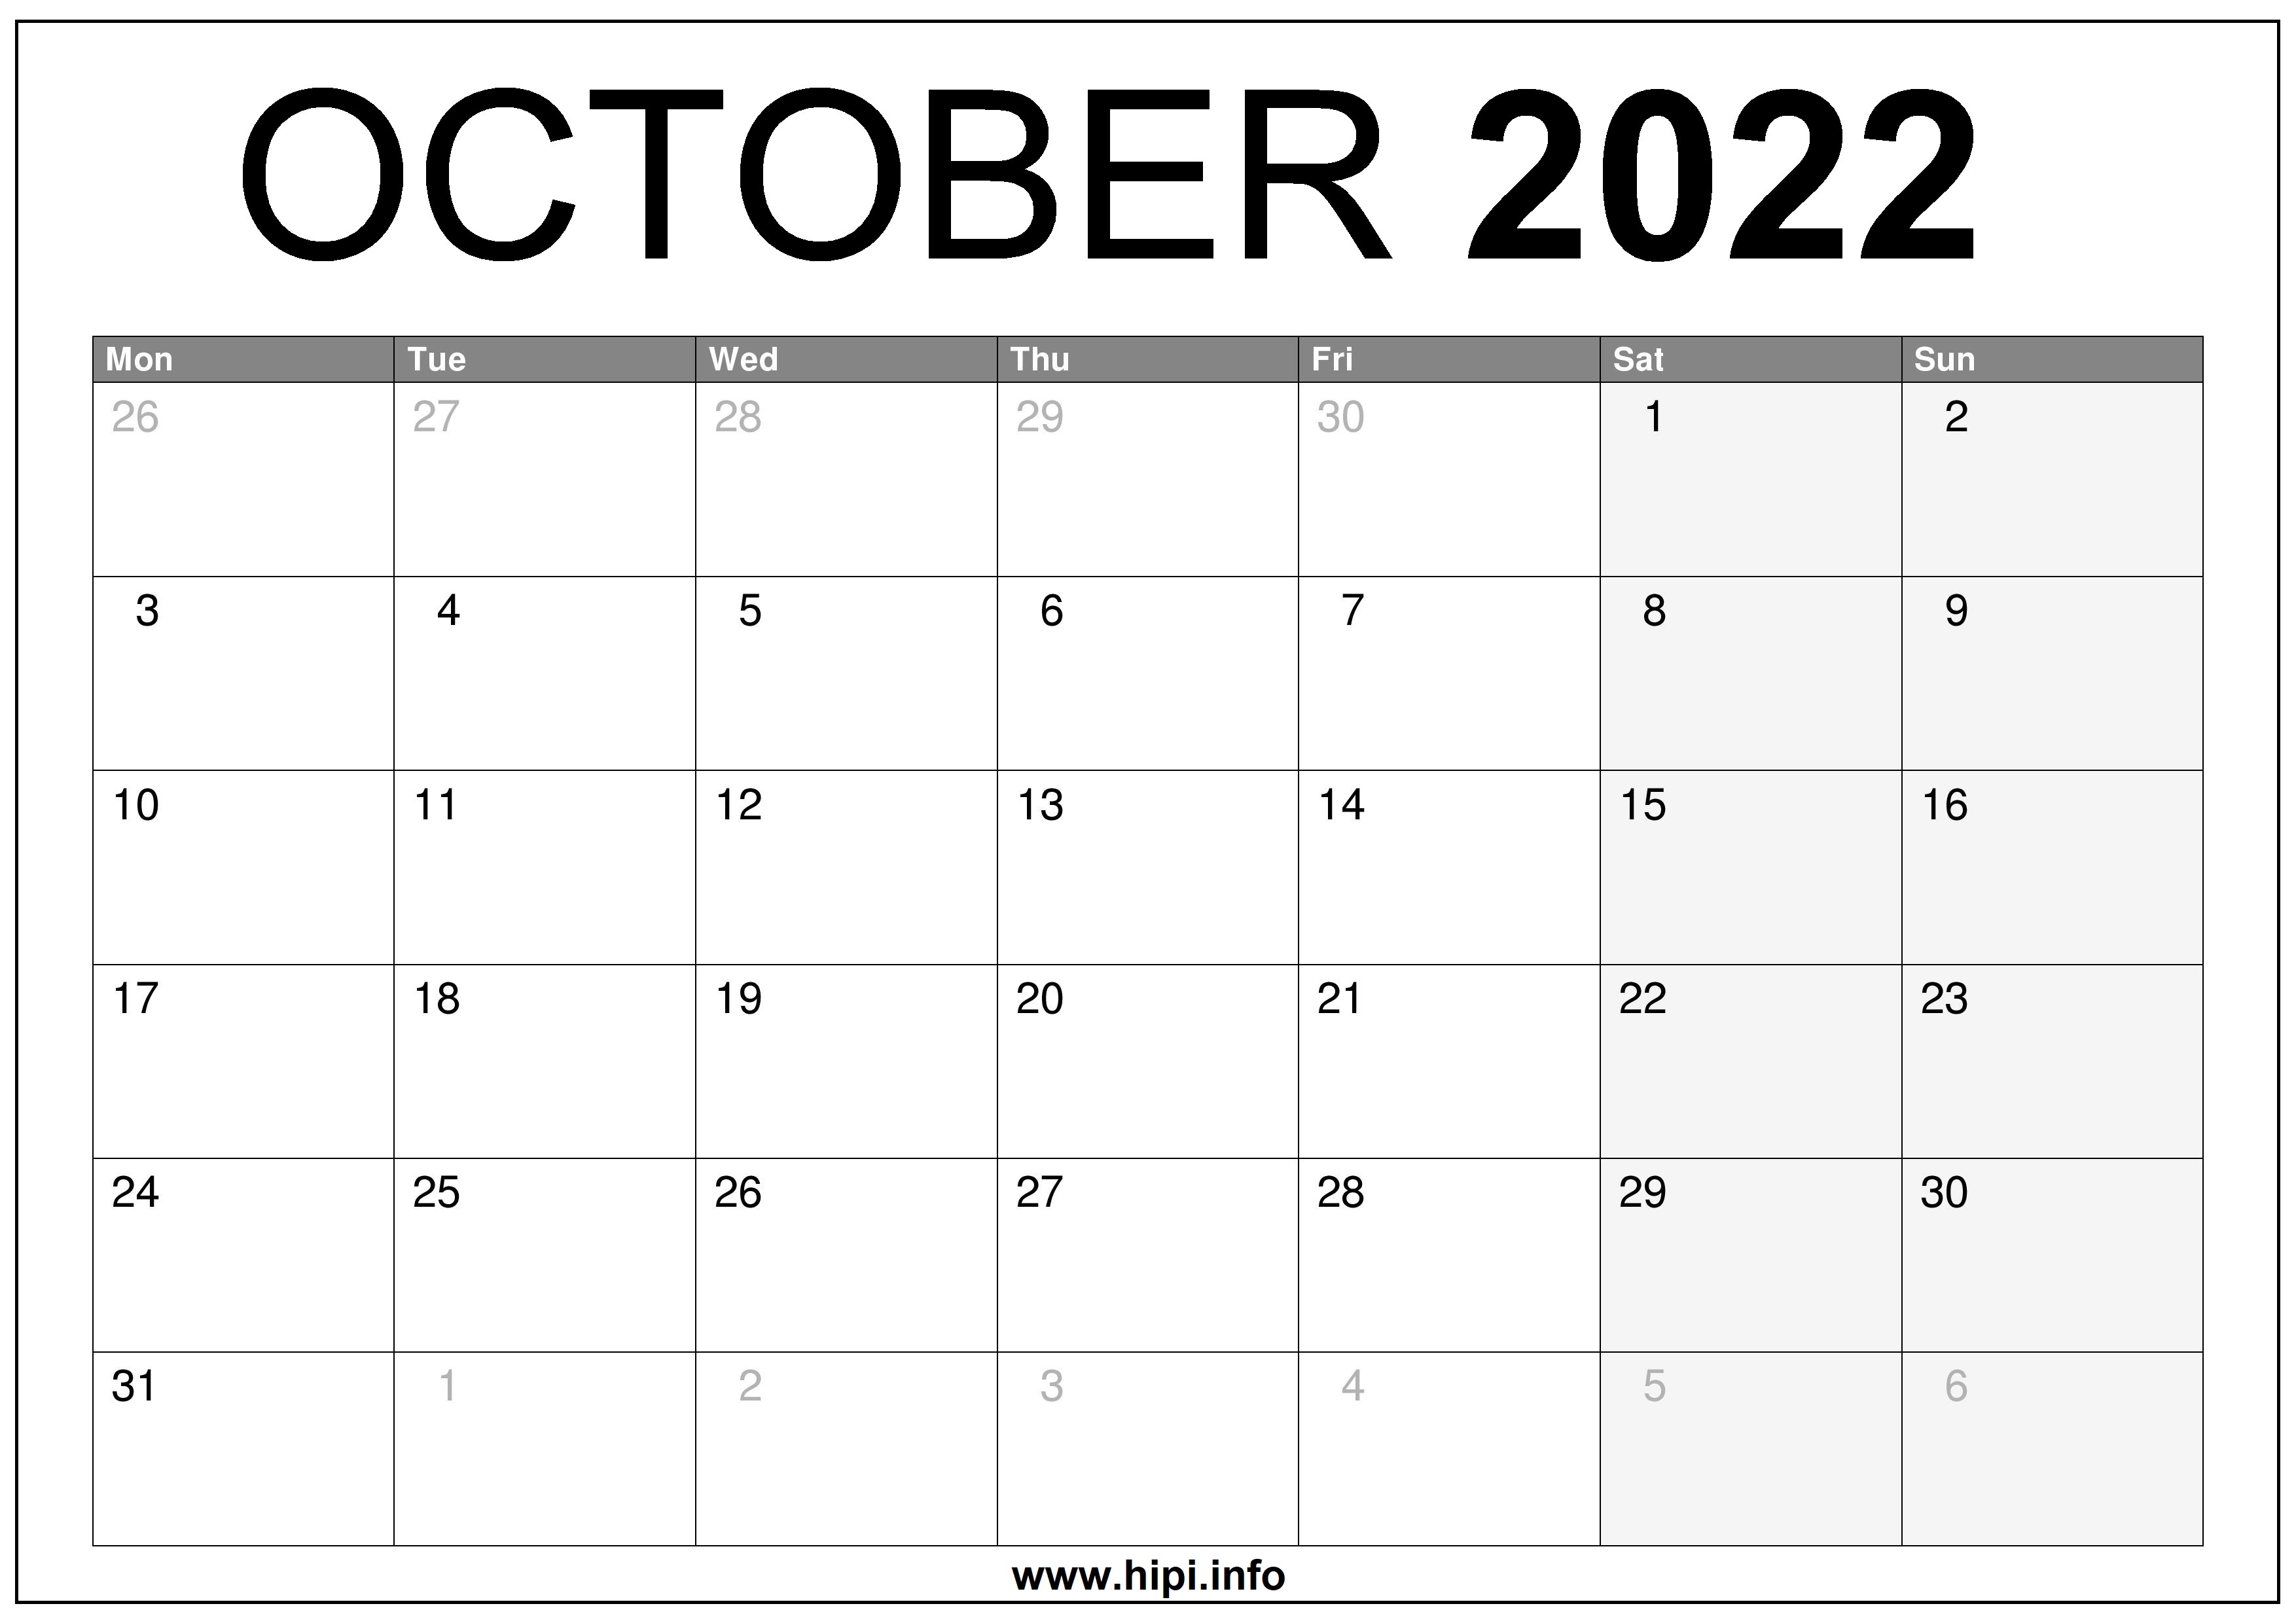 October 2022 Calendar Free Printable October 2022 Uk Calendar Printable Free - Hipi.info | Calendars Printable  Free